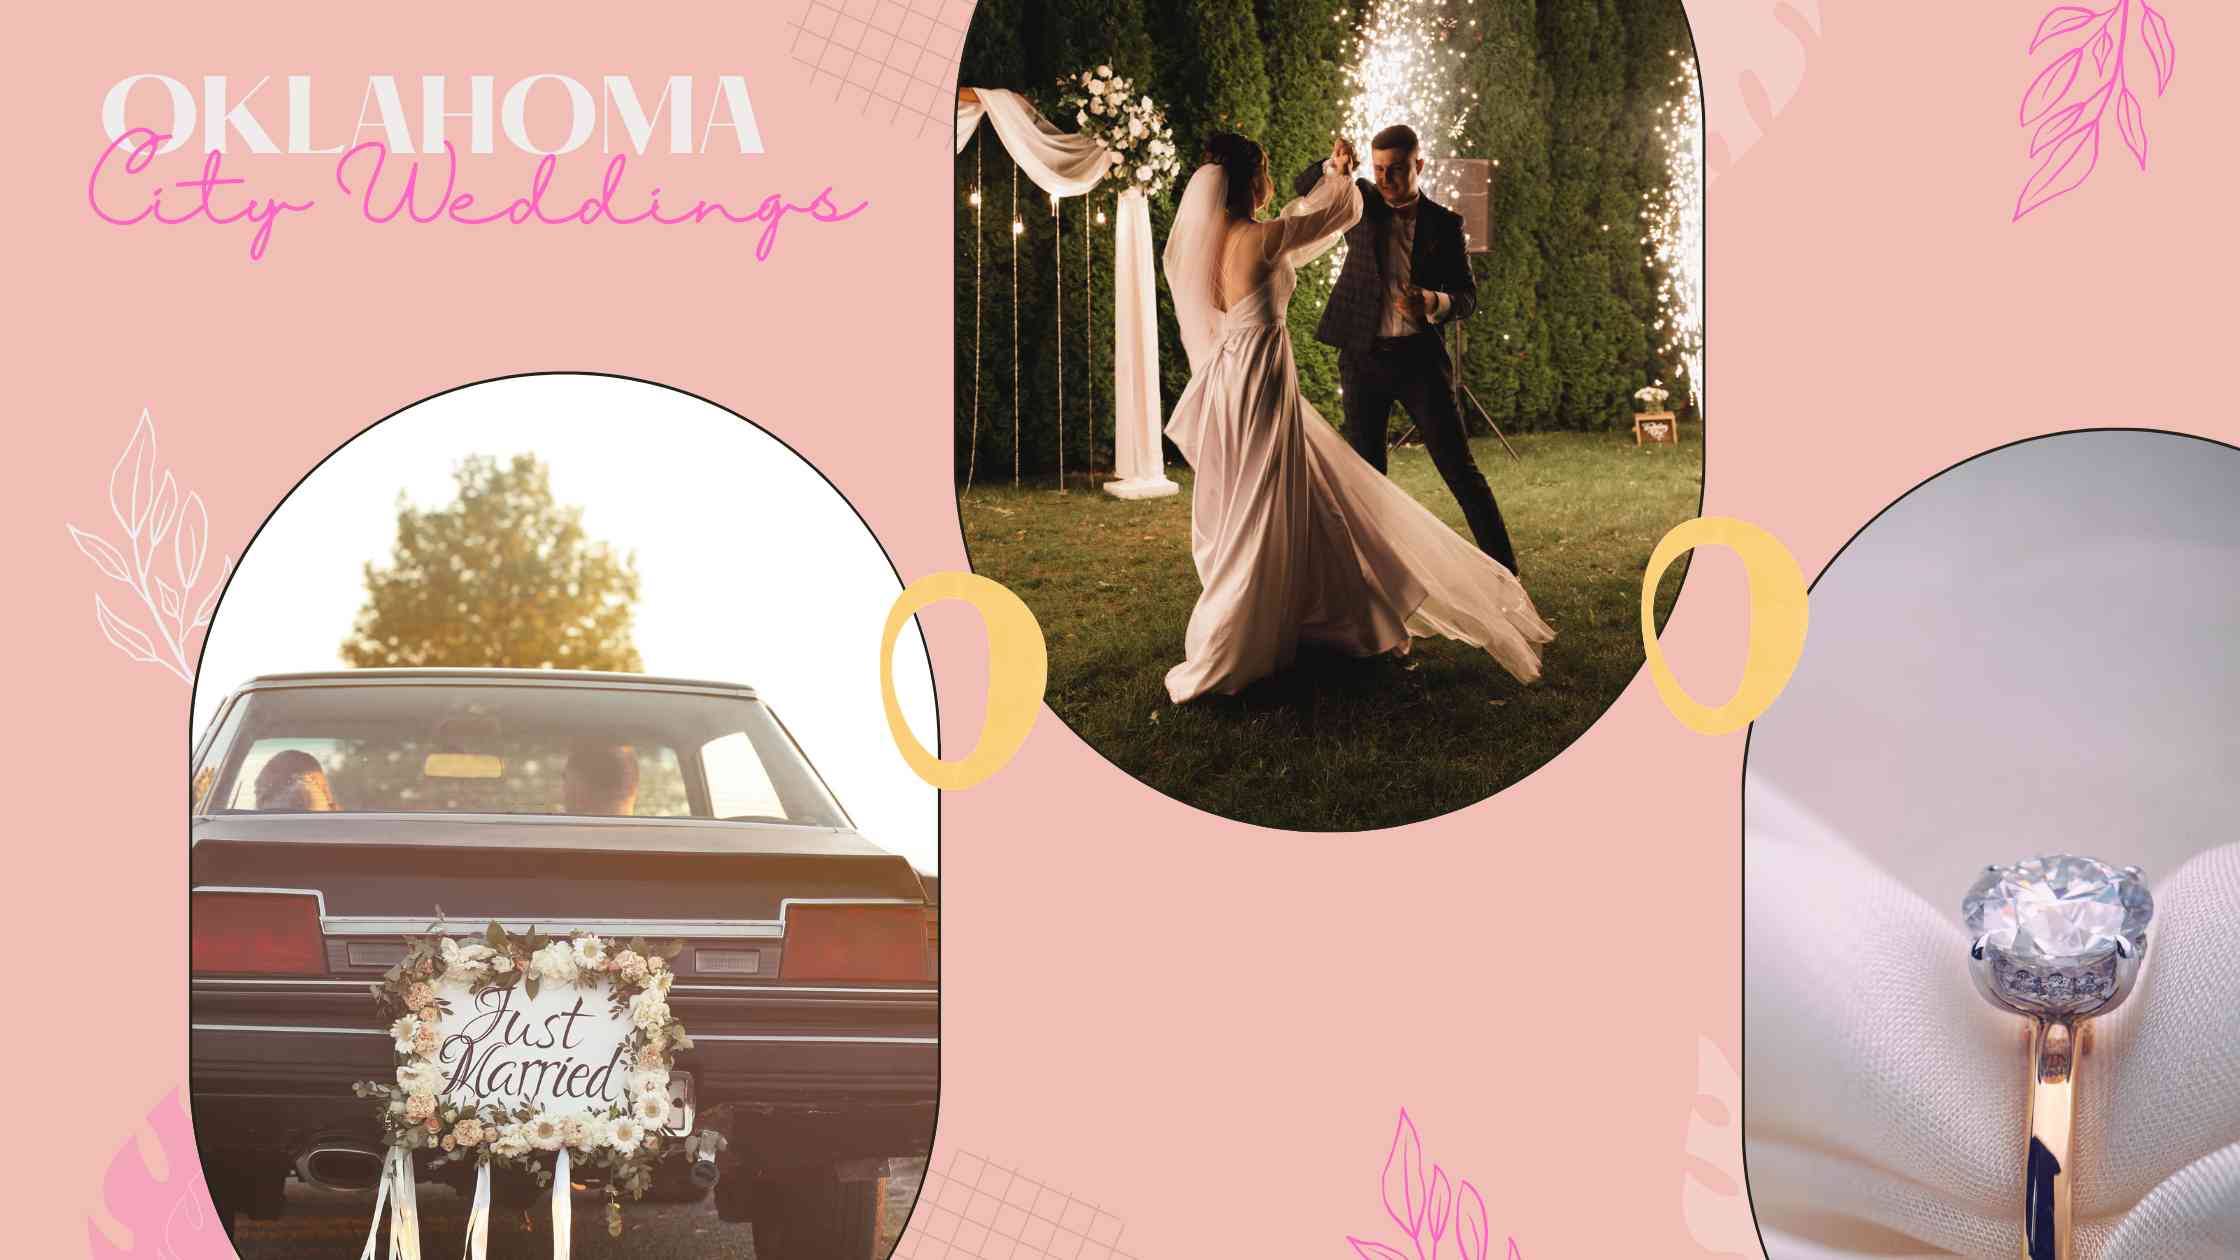 Memphis Wedding Planning, Memphis Wedding Photographers, Your Complete Wedding Planning Resource